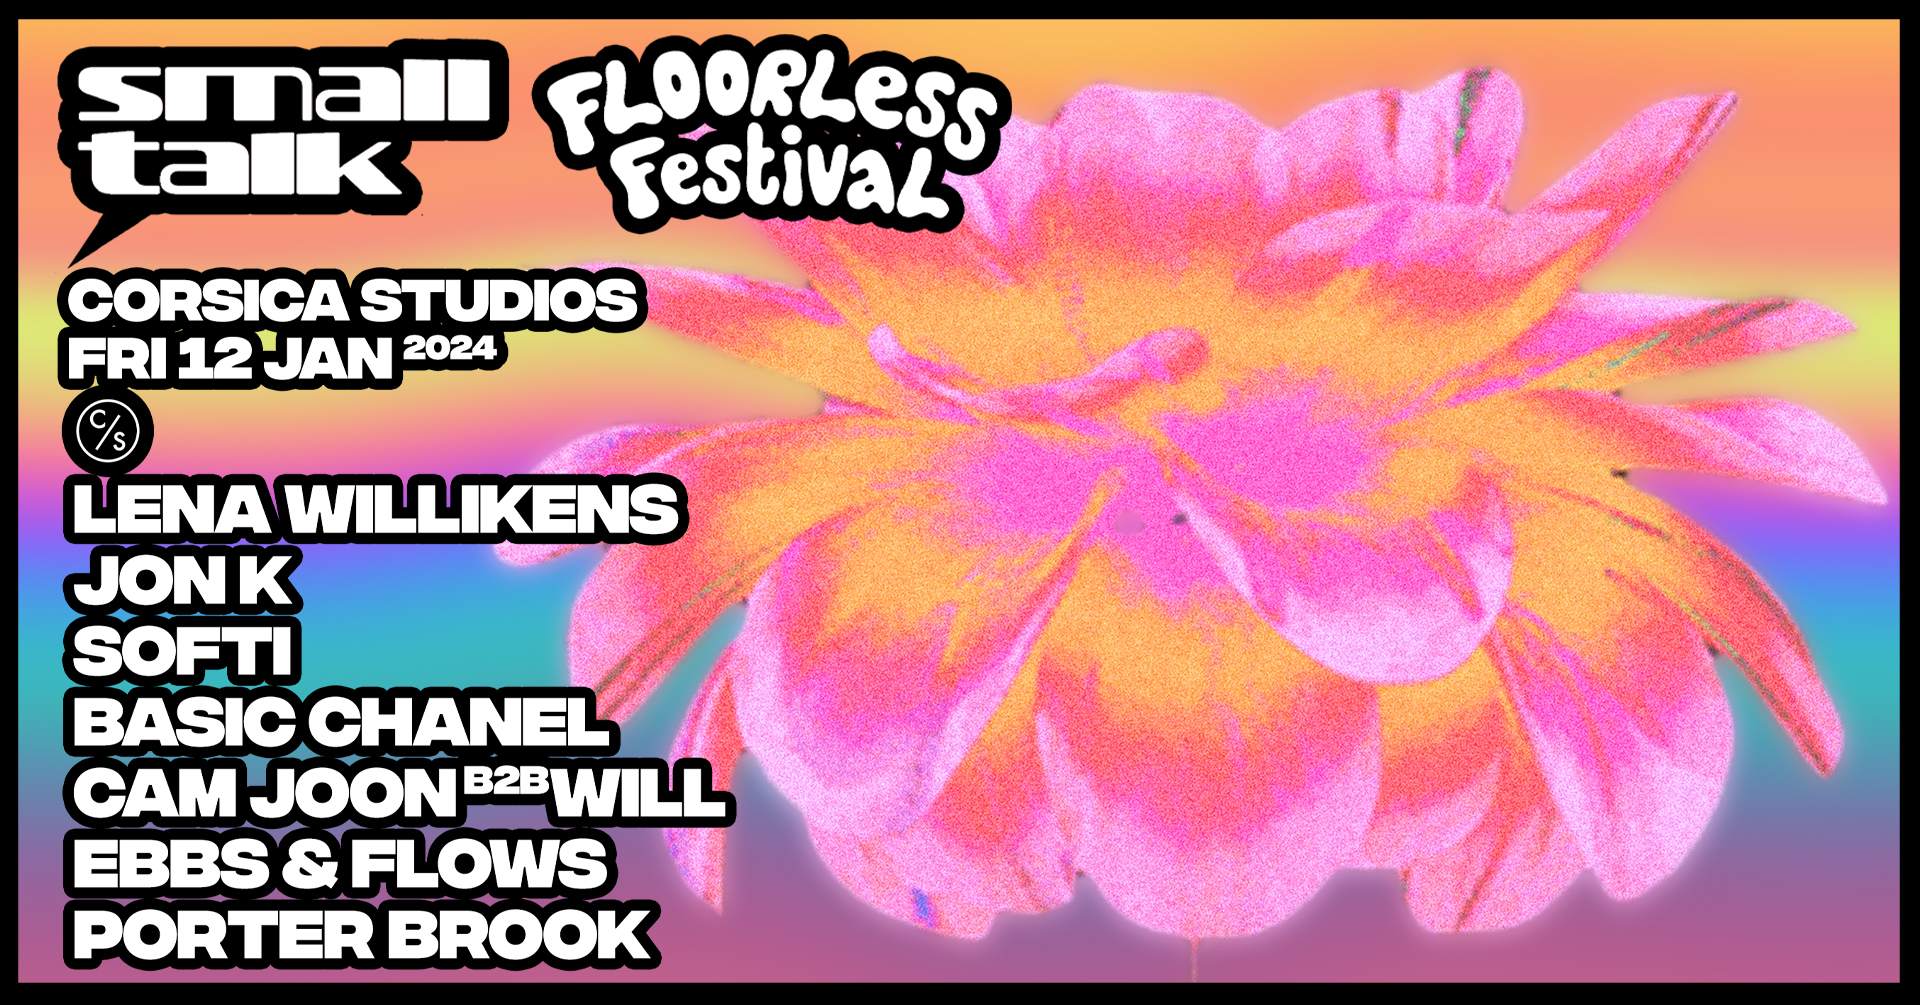 Floorless x Small Talk: Lena Willikens, Jon K, LISH, Porter Brook, Basic Chanel - フライヤー表